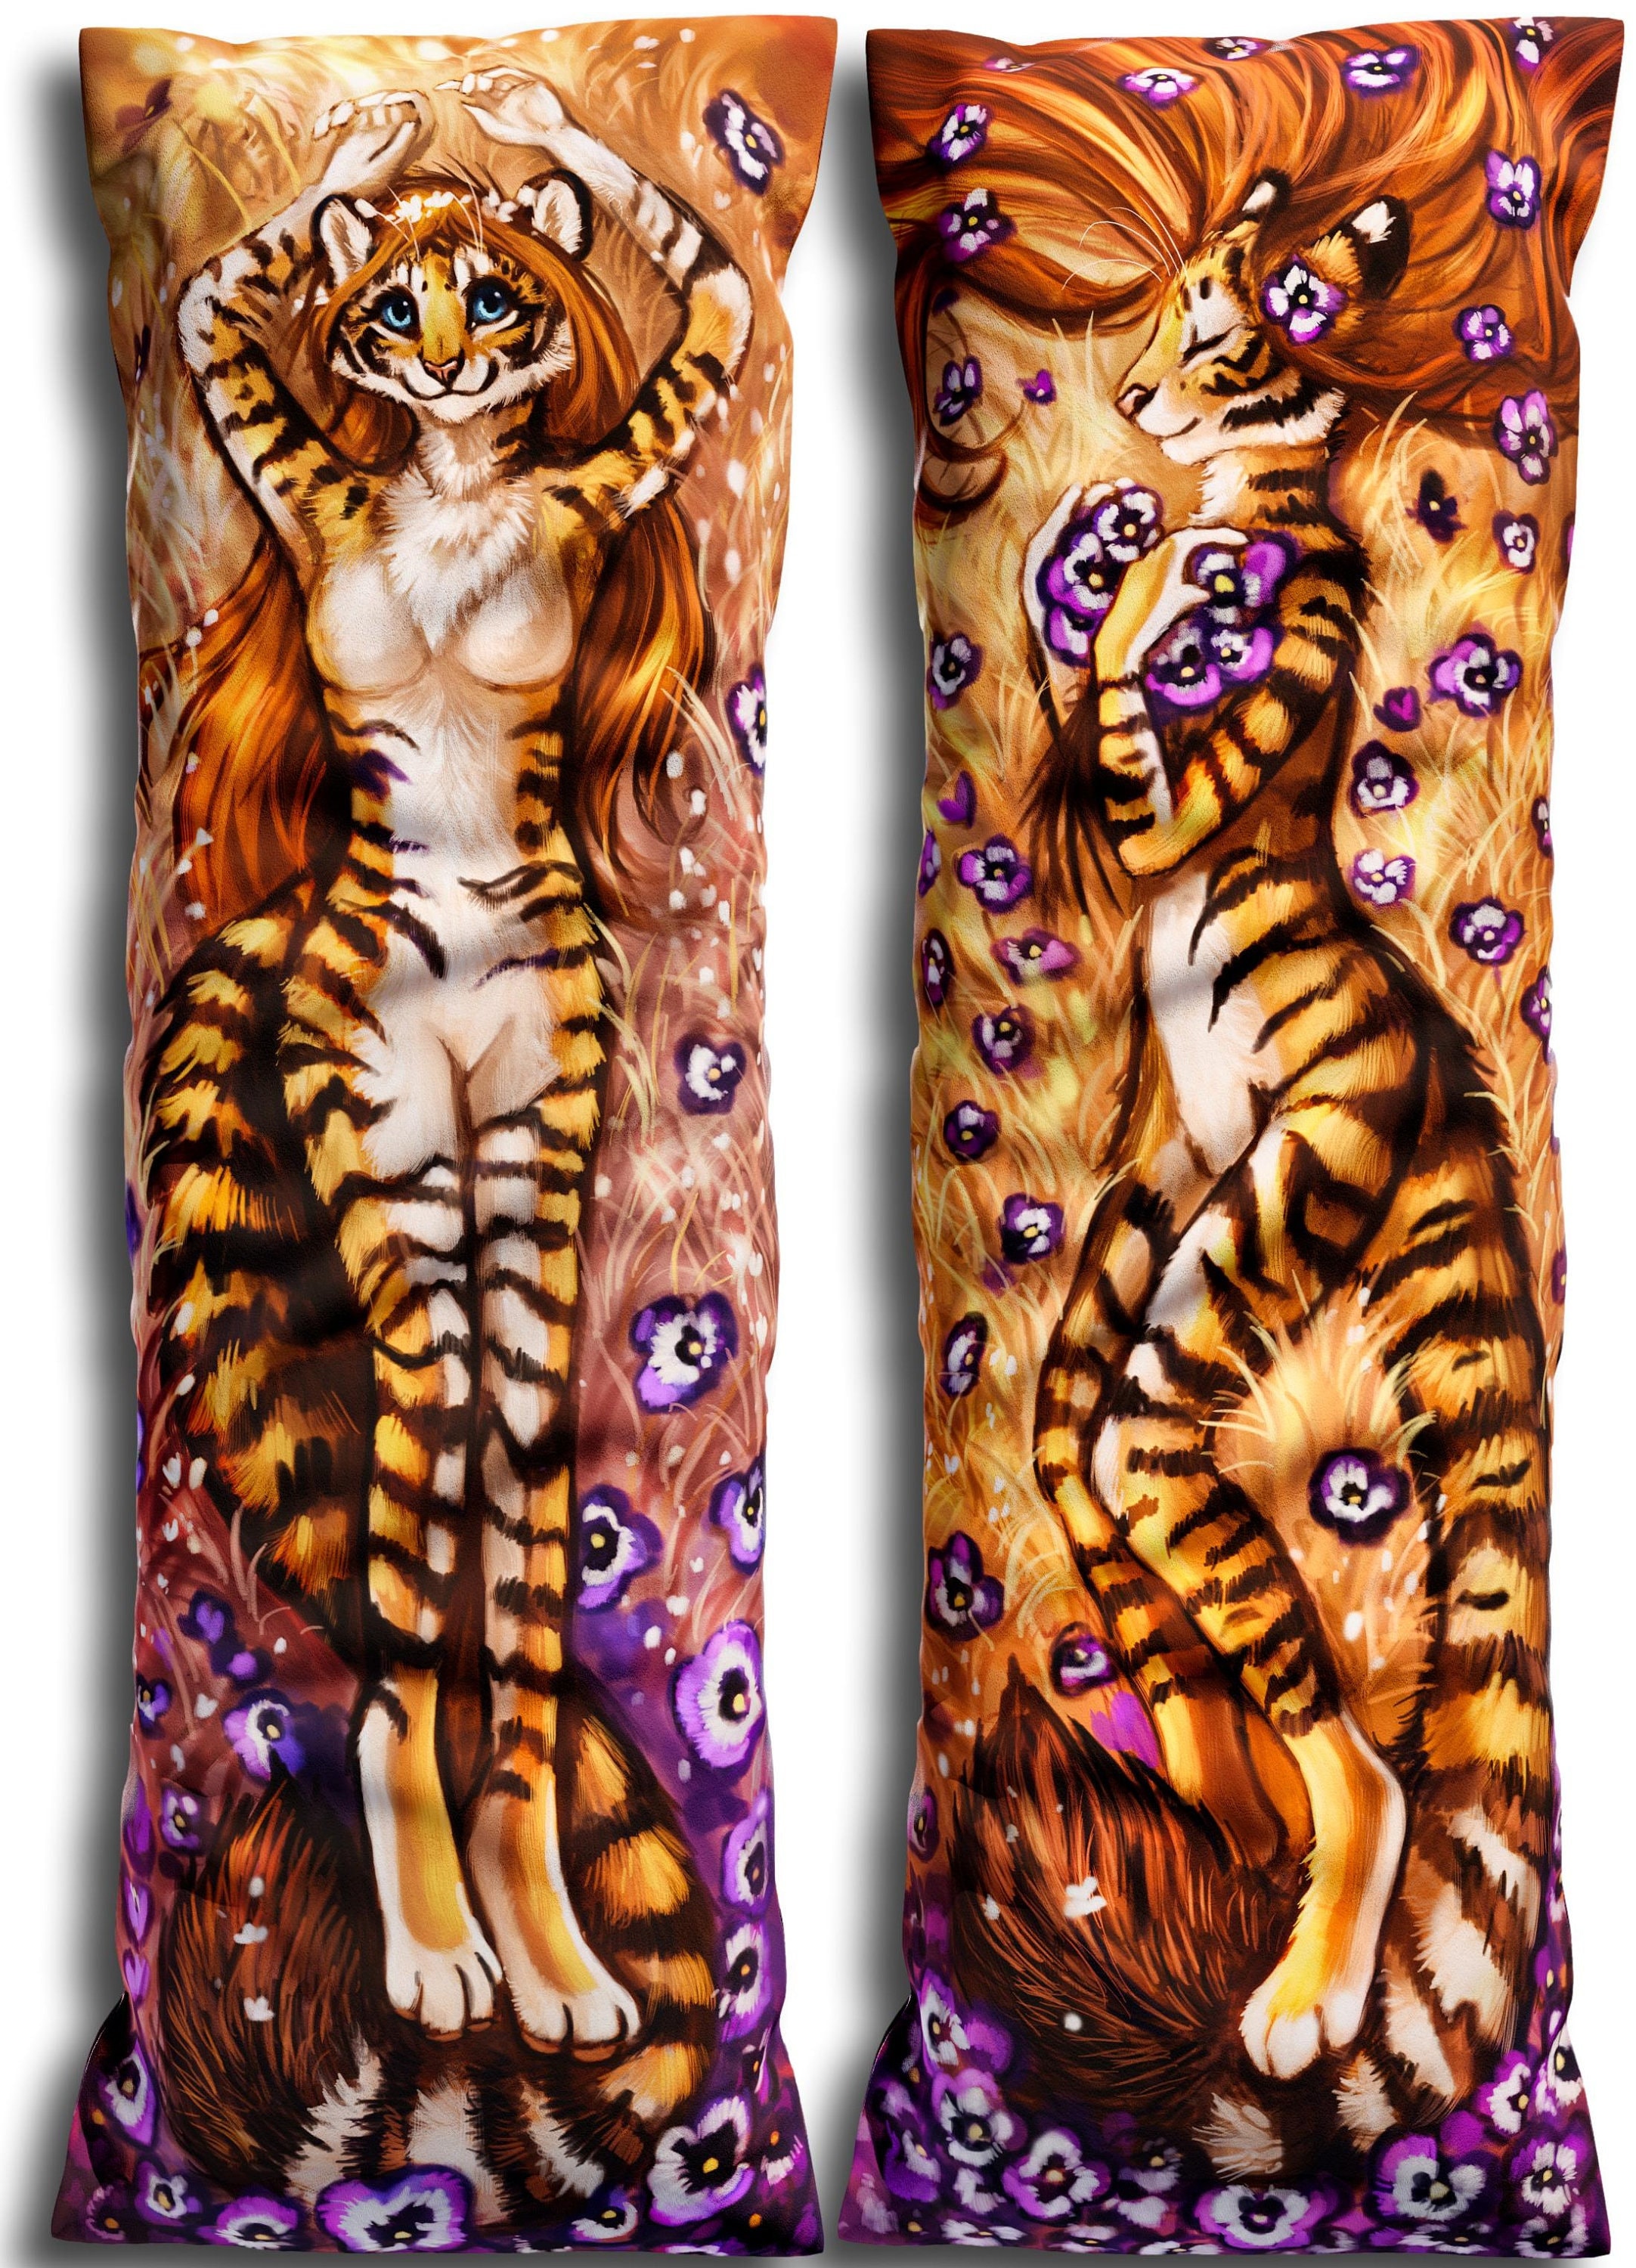 Daki Clemetine Art by Flash_lioness the Tiger Dakimakura Furry